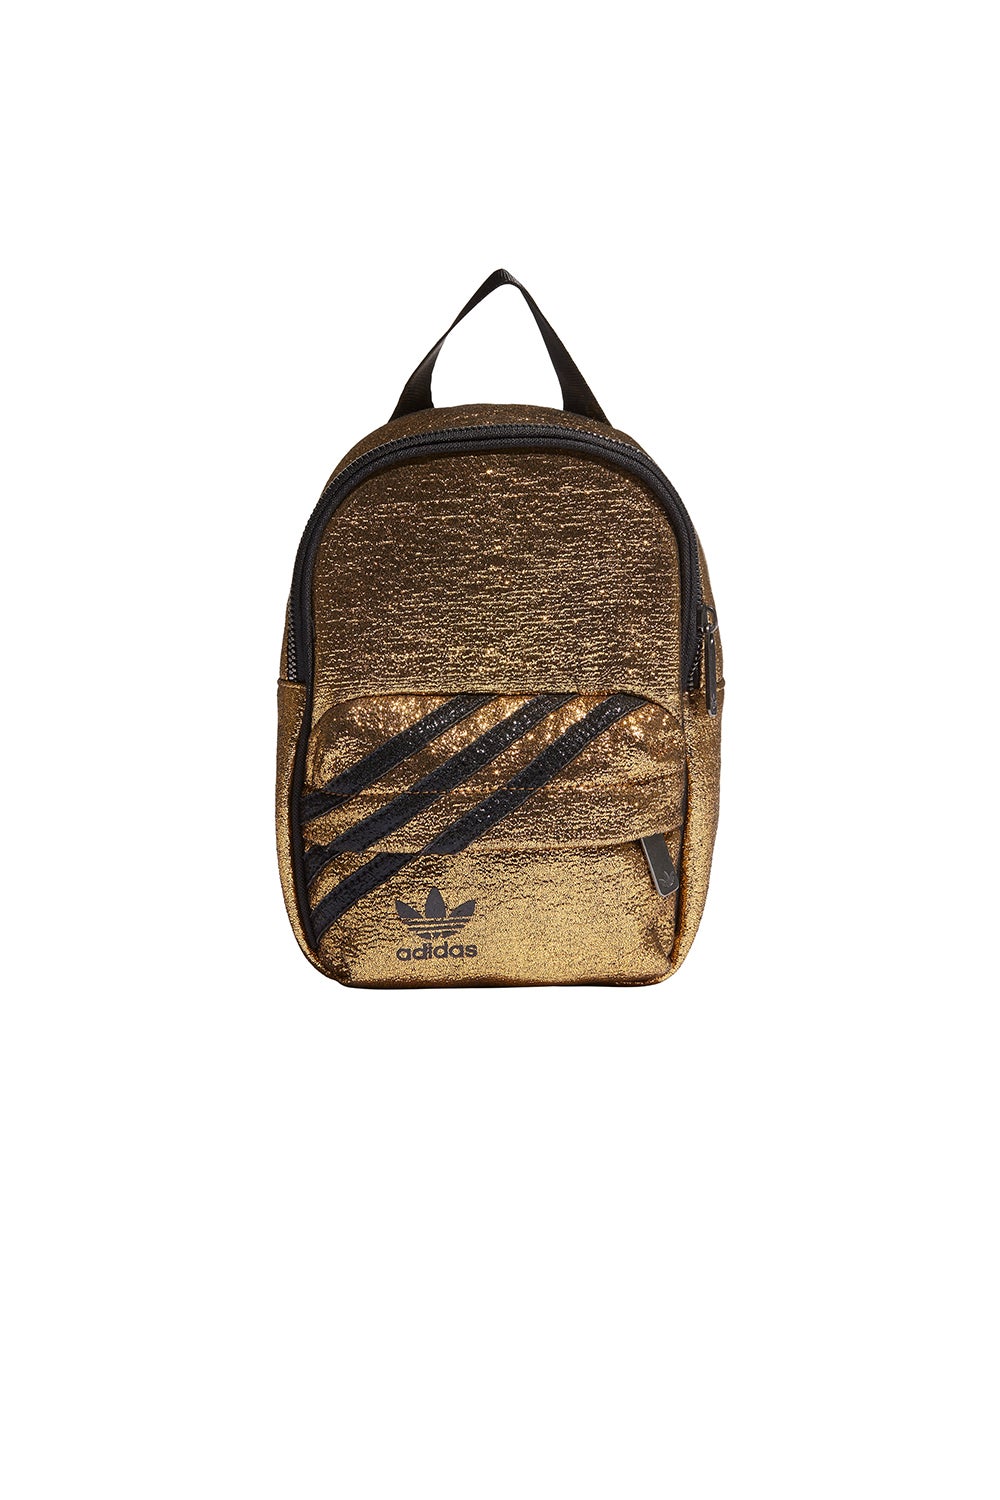 adidas Mini Backpack Gold Metallic/Black